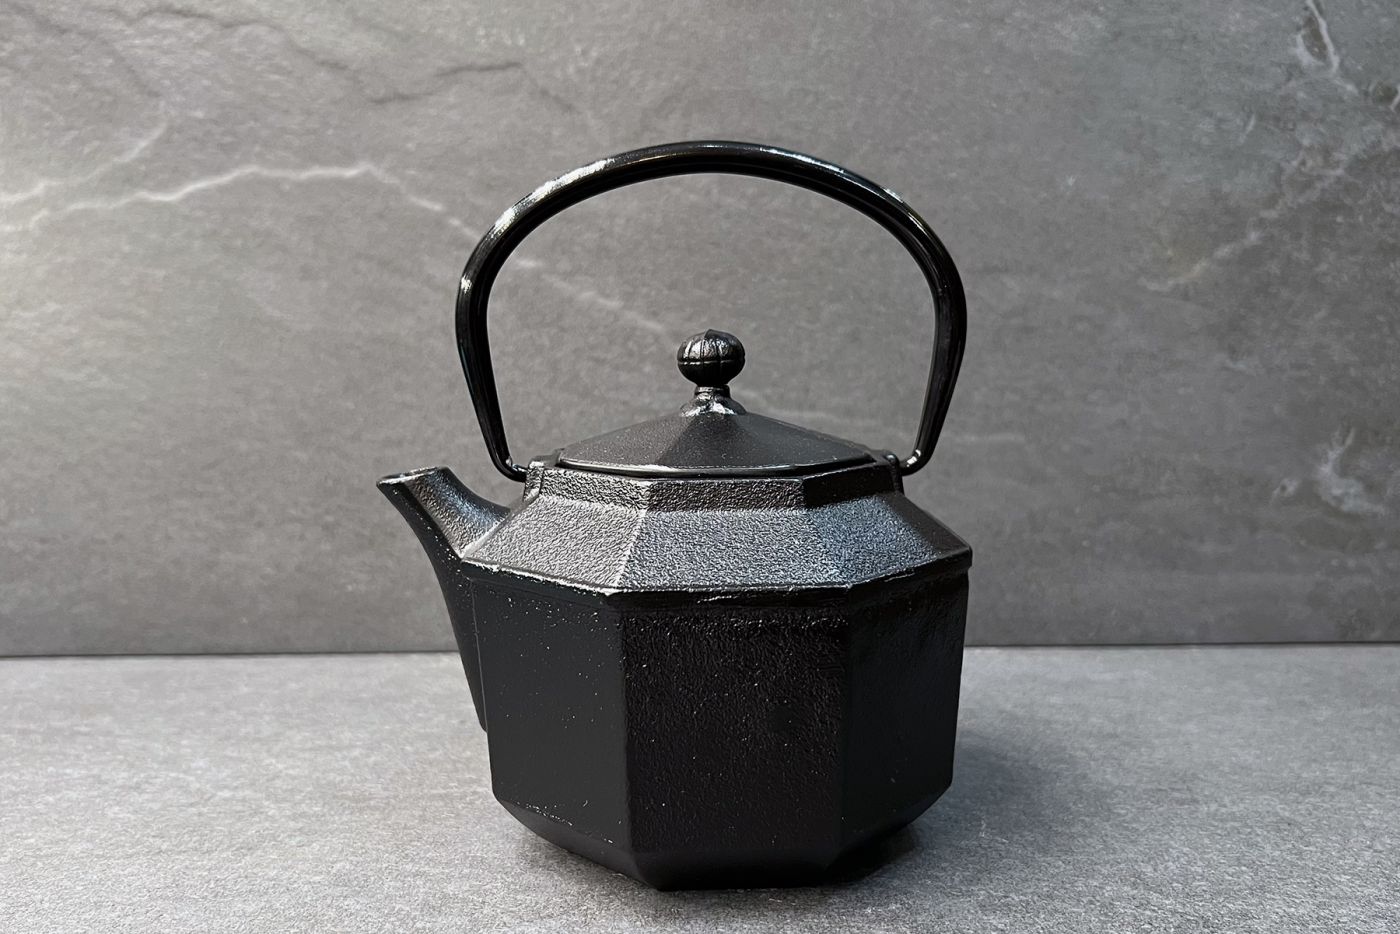 Lantern Black Cast Iron Teapot 0.8L